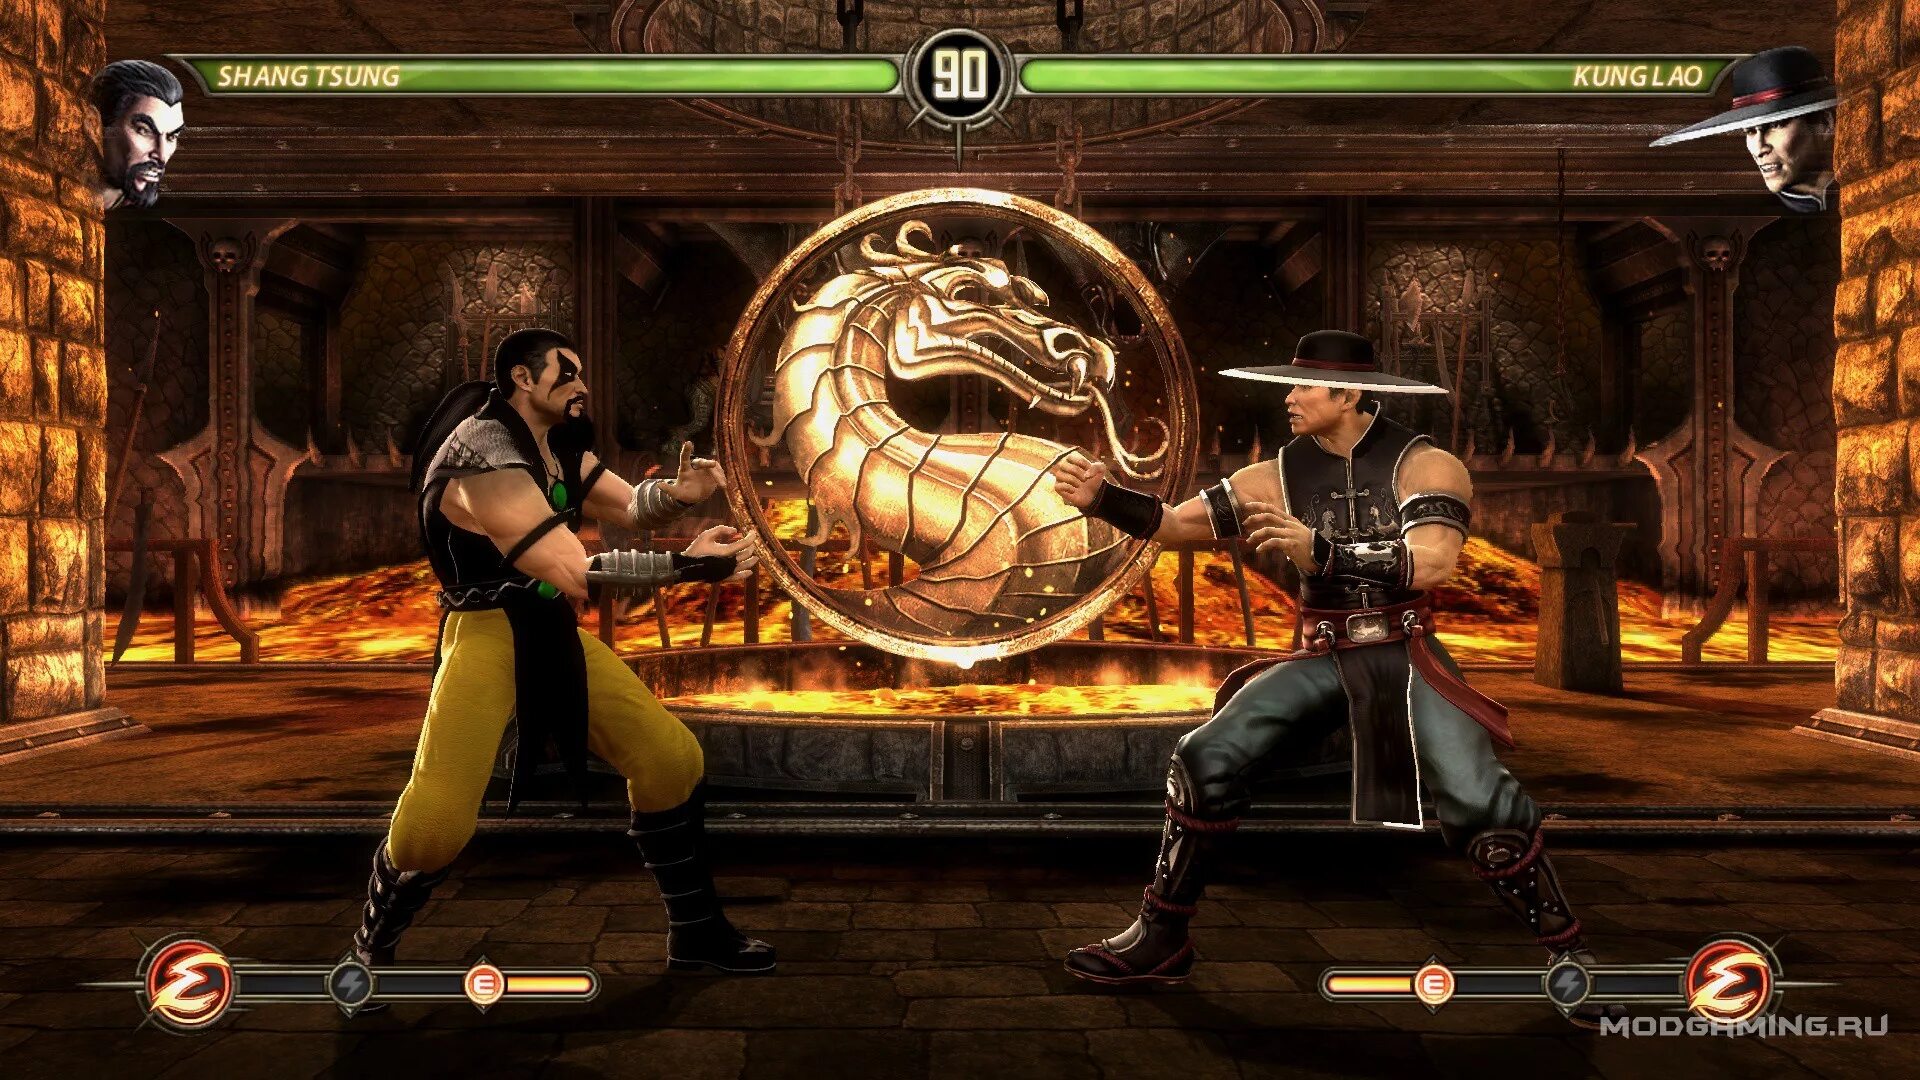 Шанг Цунг мортал комбат 3. Игра мортал комбат игра мортал комбат. Mortal Mortal Kombat 3 Shang Tsung. Mortal Kombat 2002.